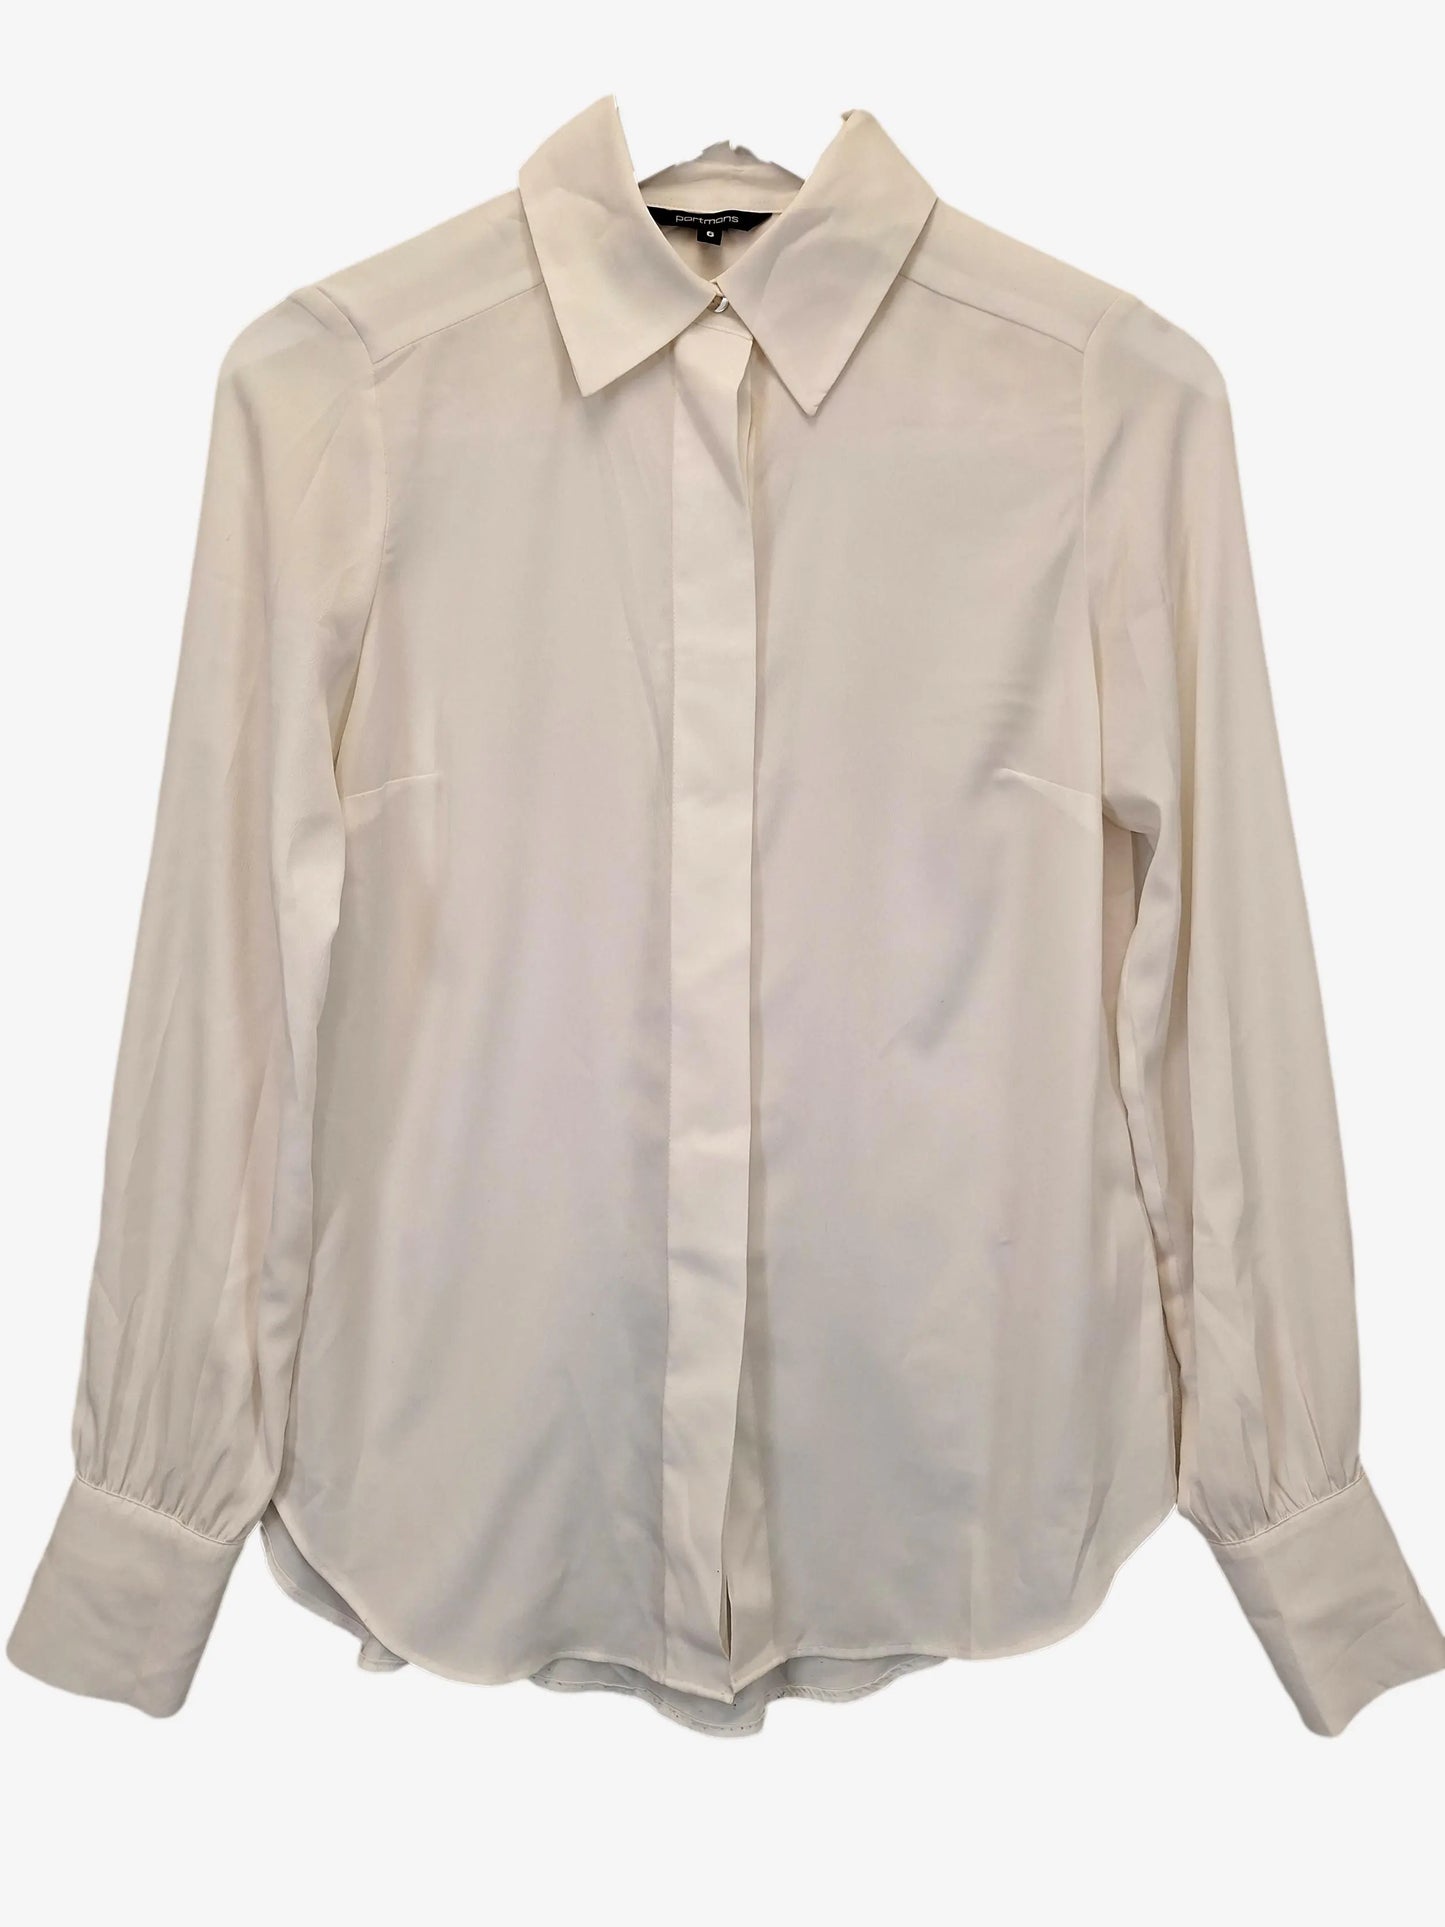 Portmans Off White Silver Cuff Work Shirt Size 6 by SwapUp-Online Second Hand Store-Online Thrift Store